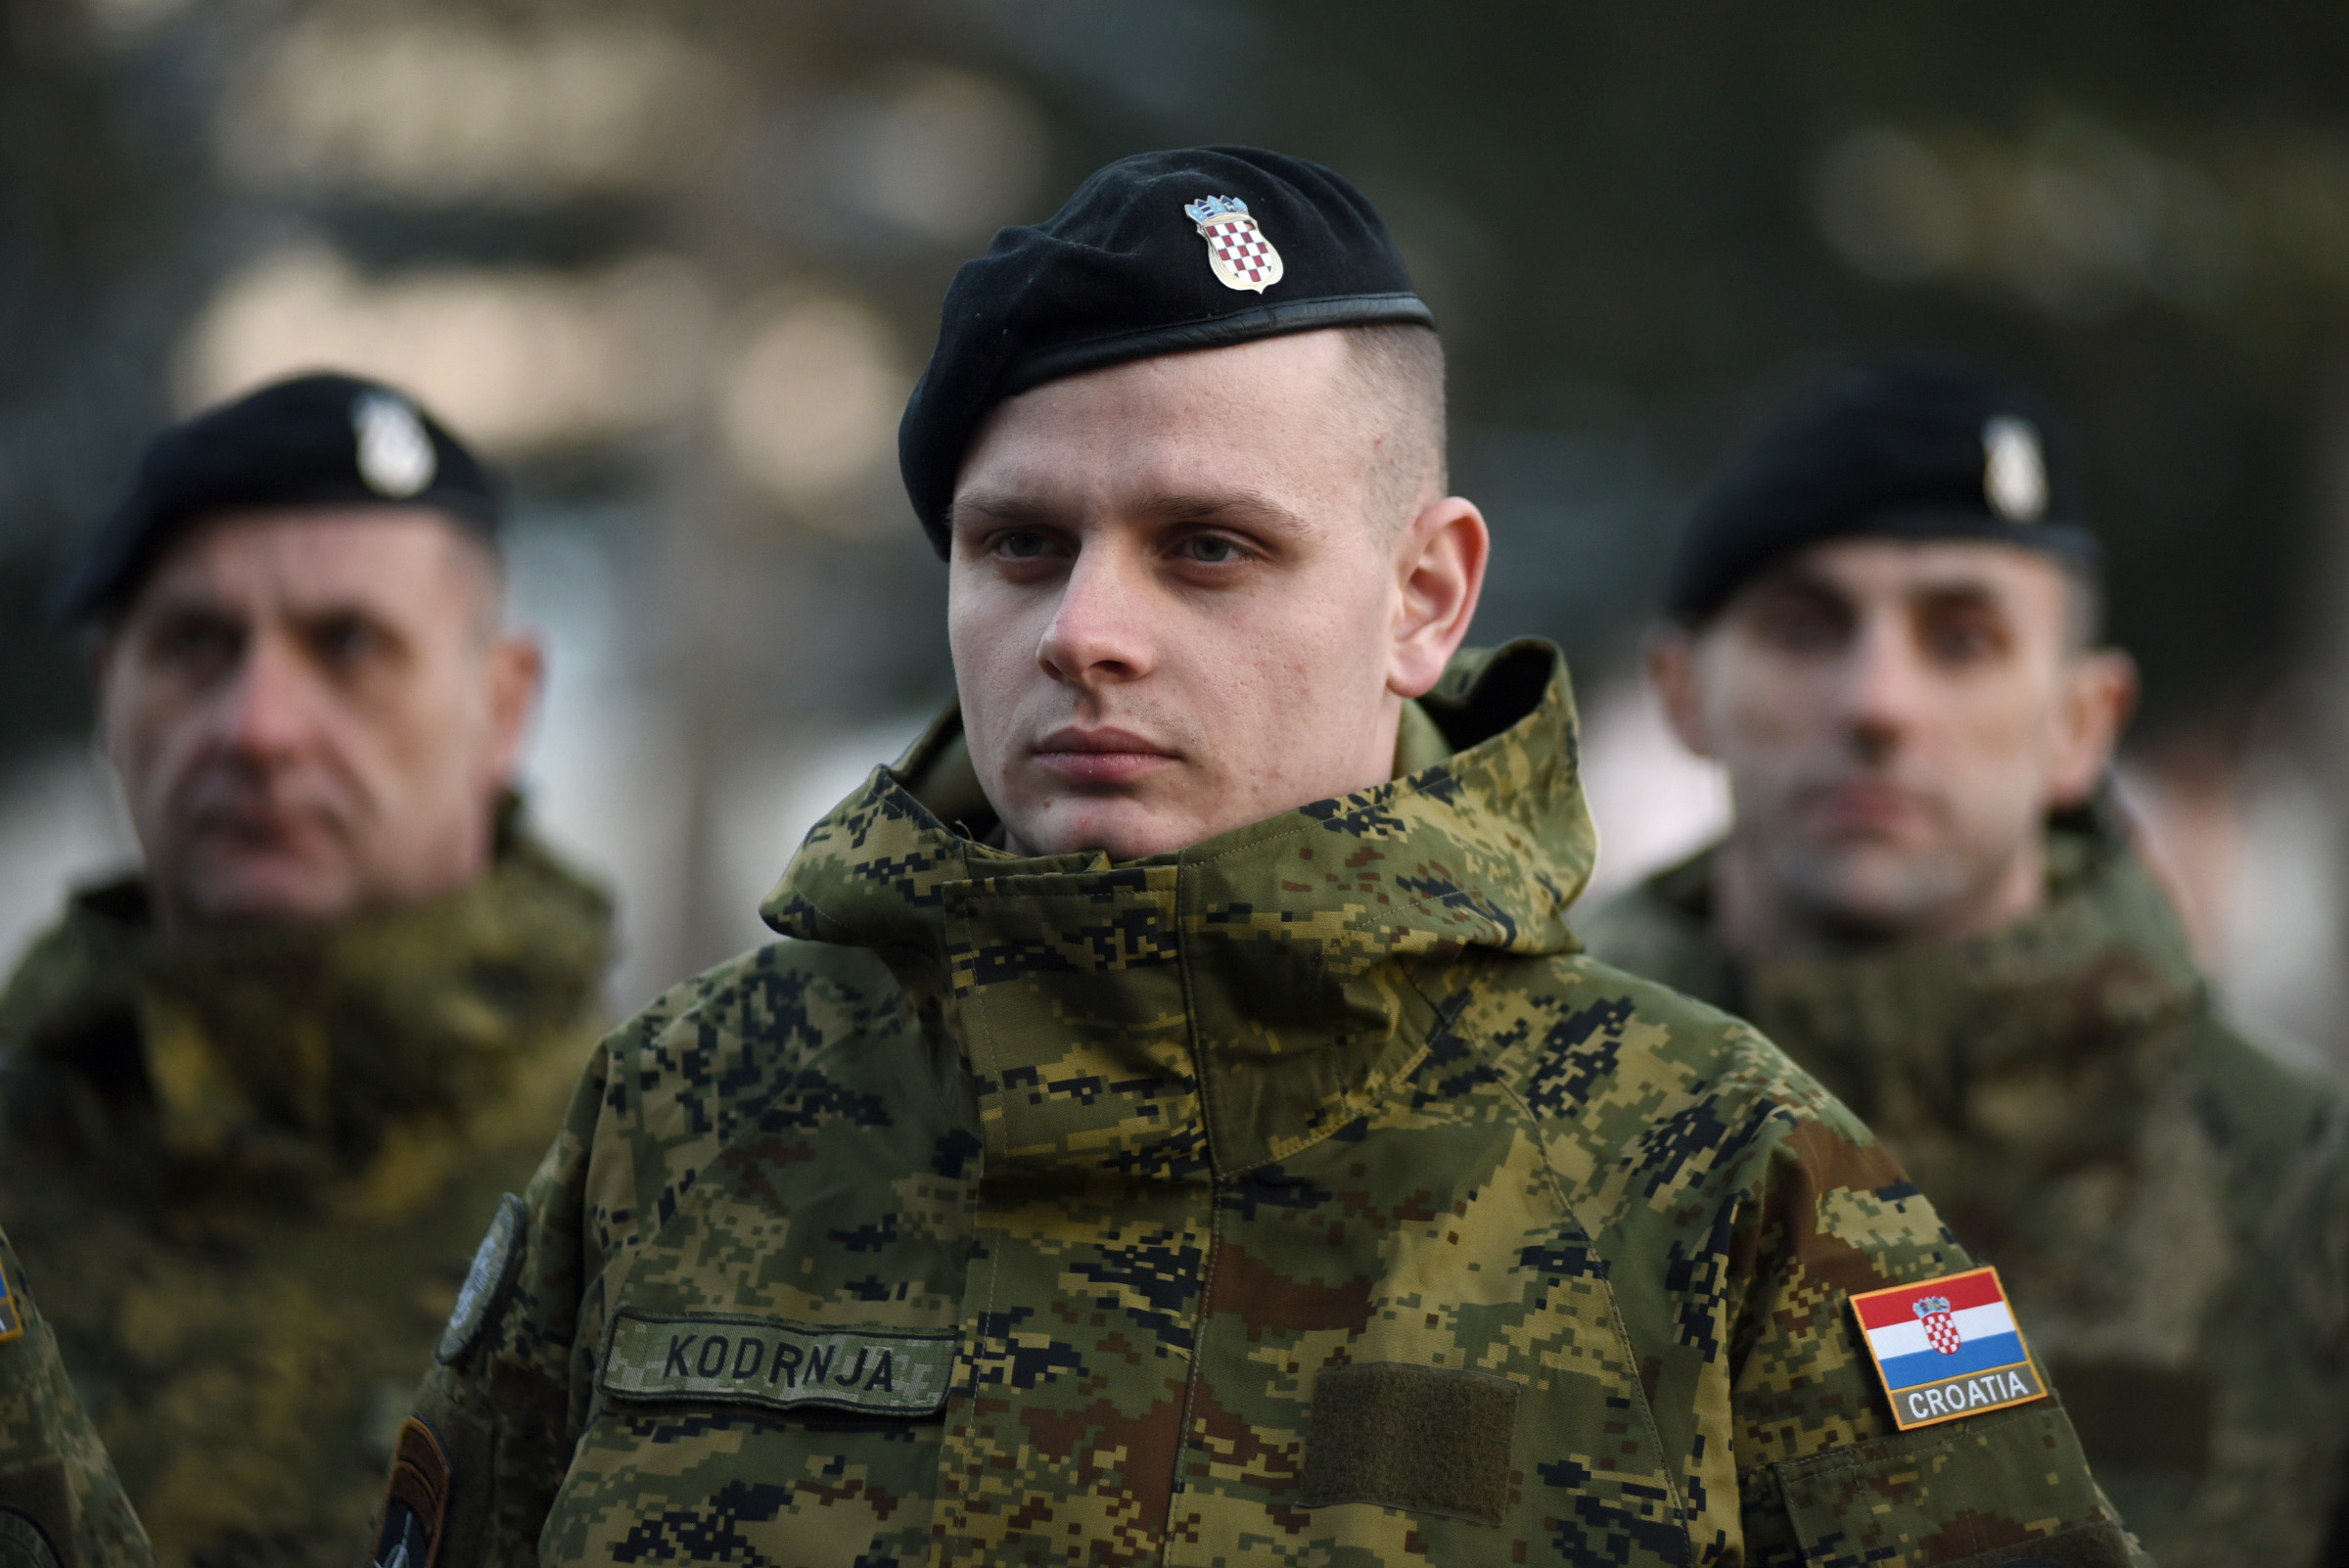 Doček 8. HRVCON-a iz NATO aktivnosti u Poljskoj